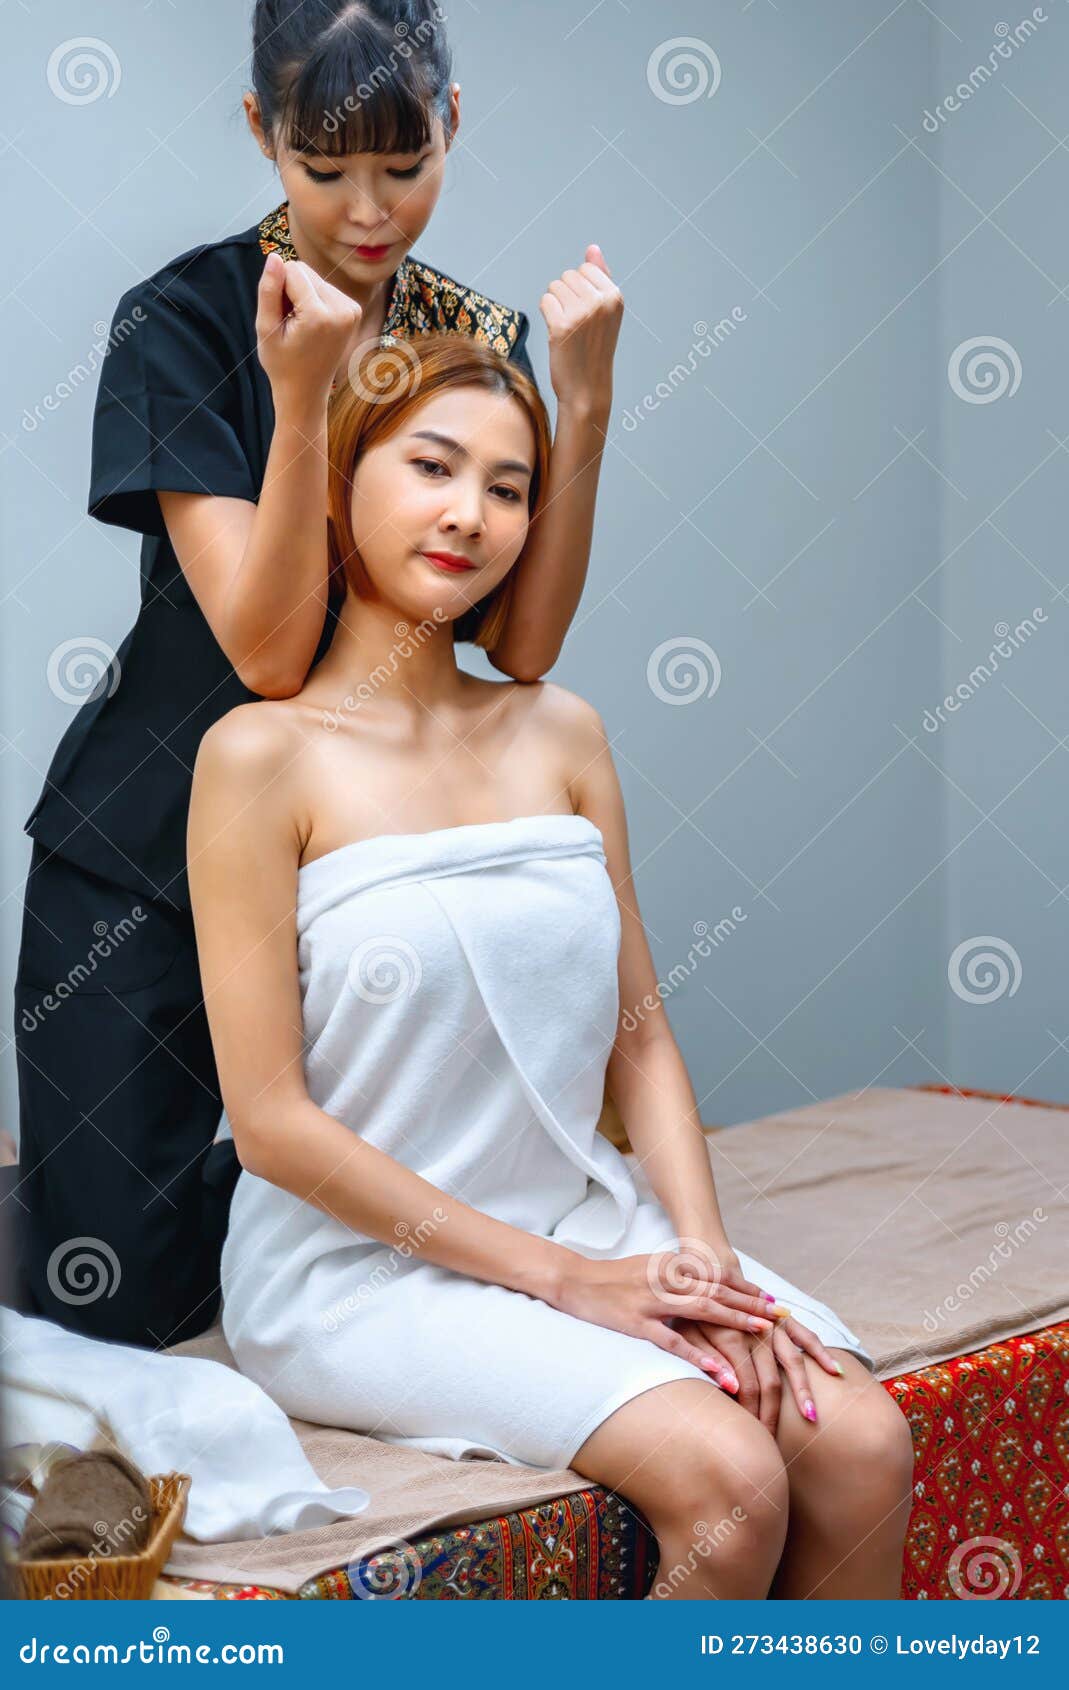 massagist tilting woman head while pressing elbow.thai massage in spa